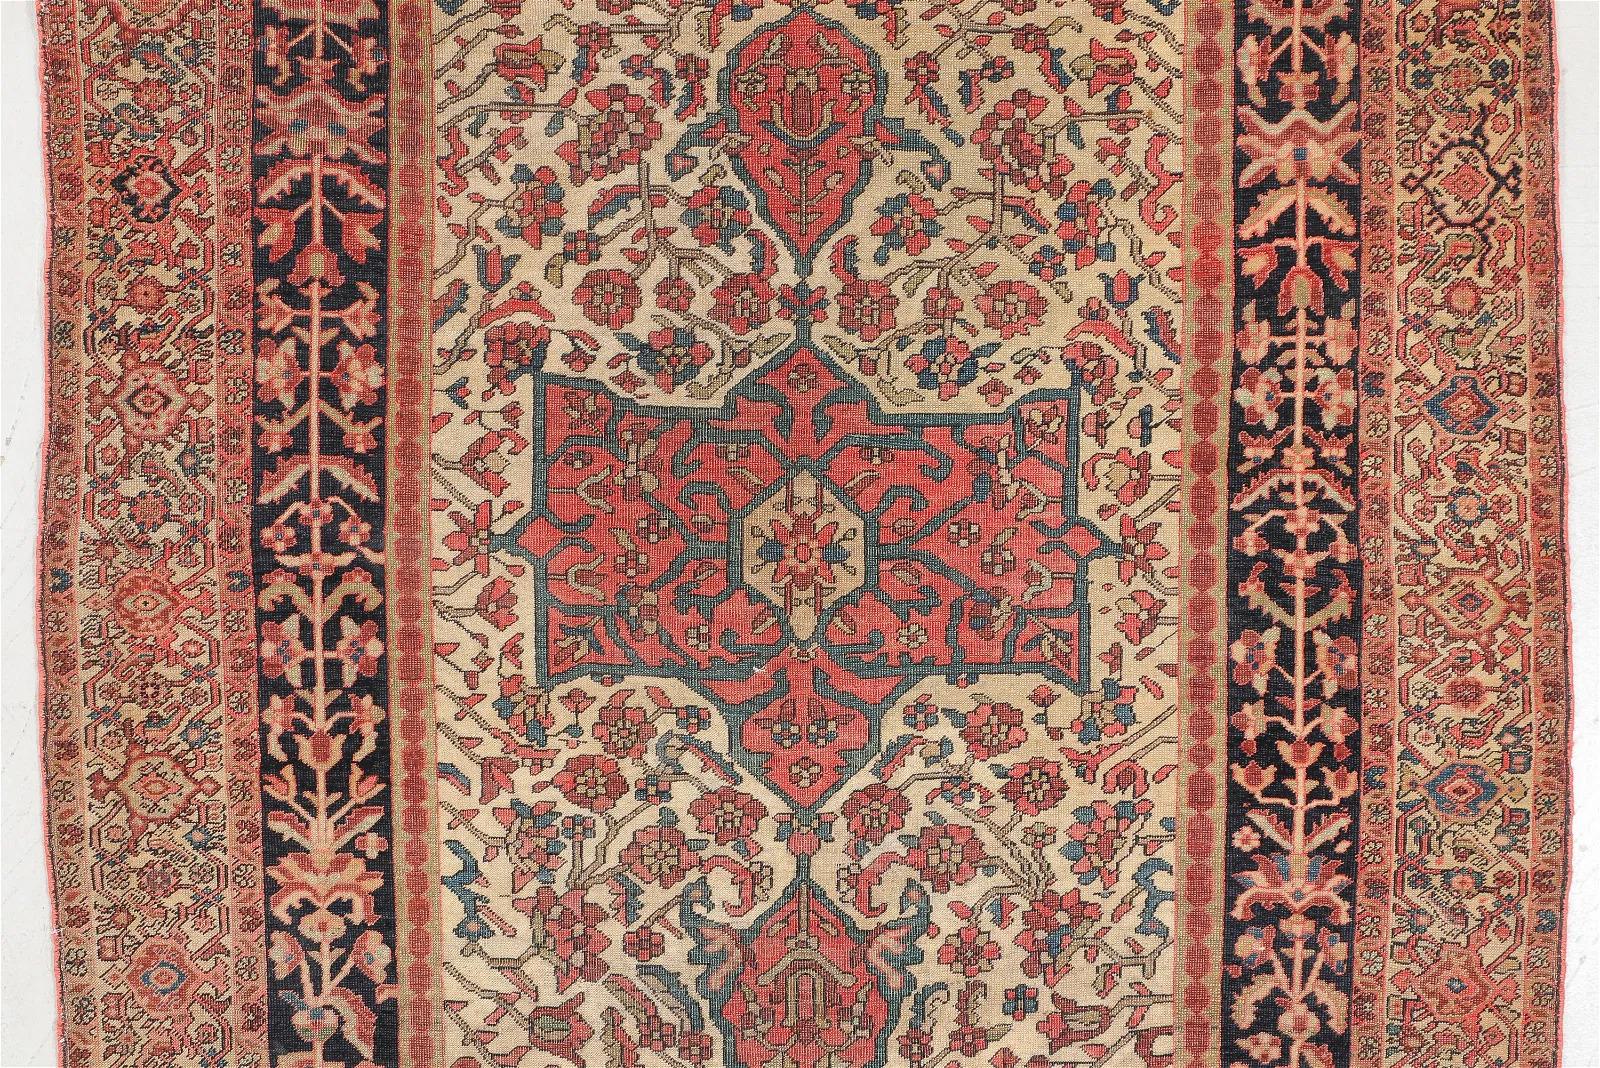 Wool Handmade Antique Persian Sarauk Farahan Rug 4.3' x 6.10', 1900s - 2B31 For Sale